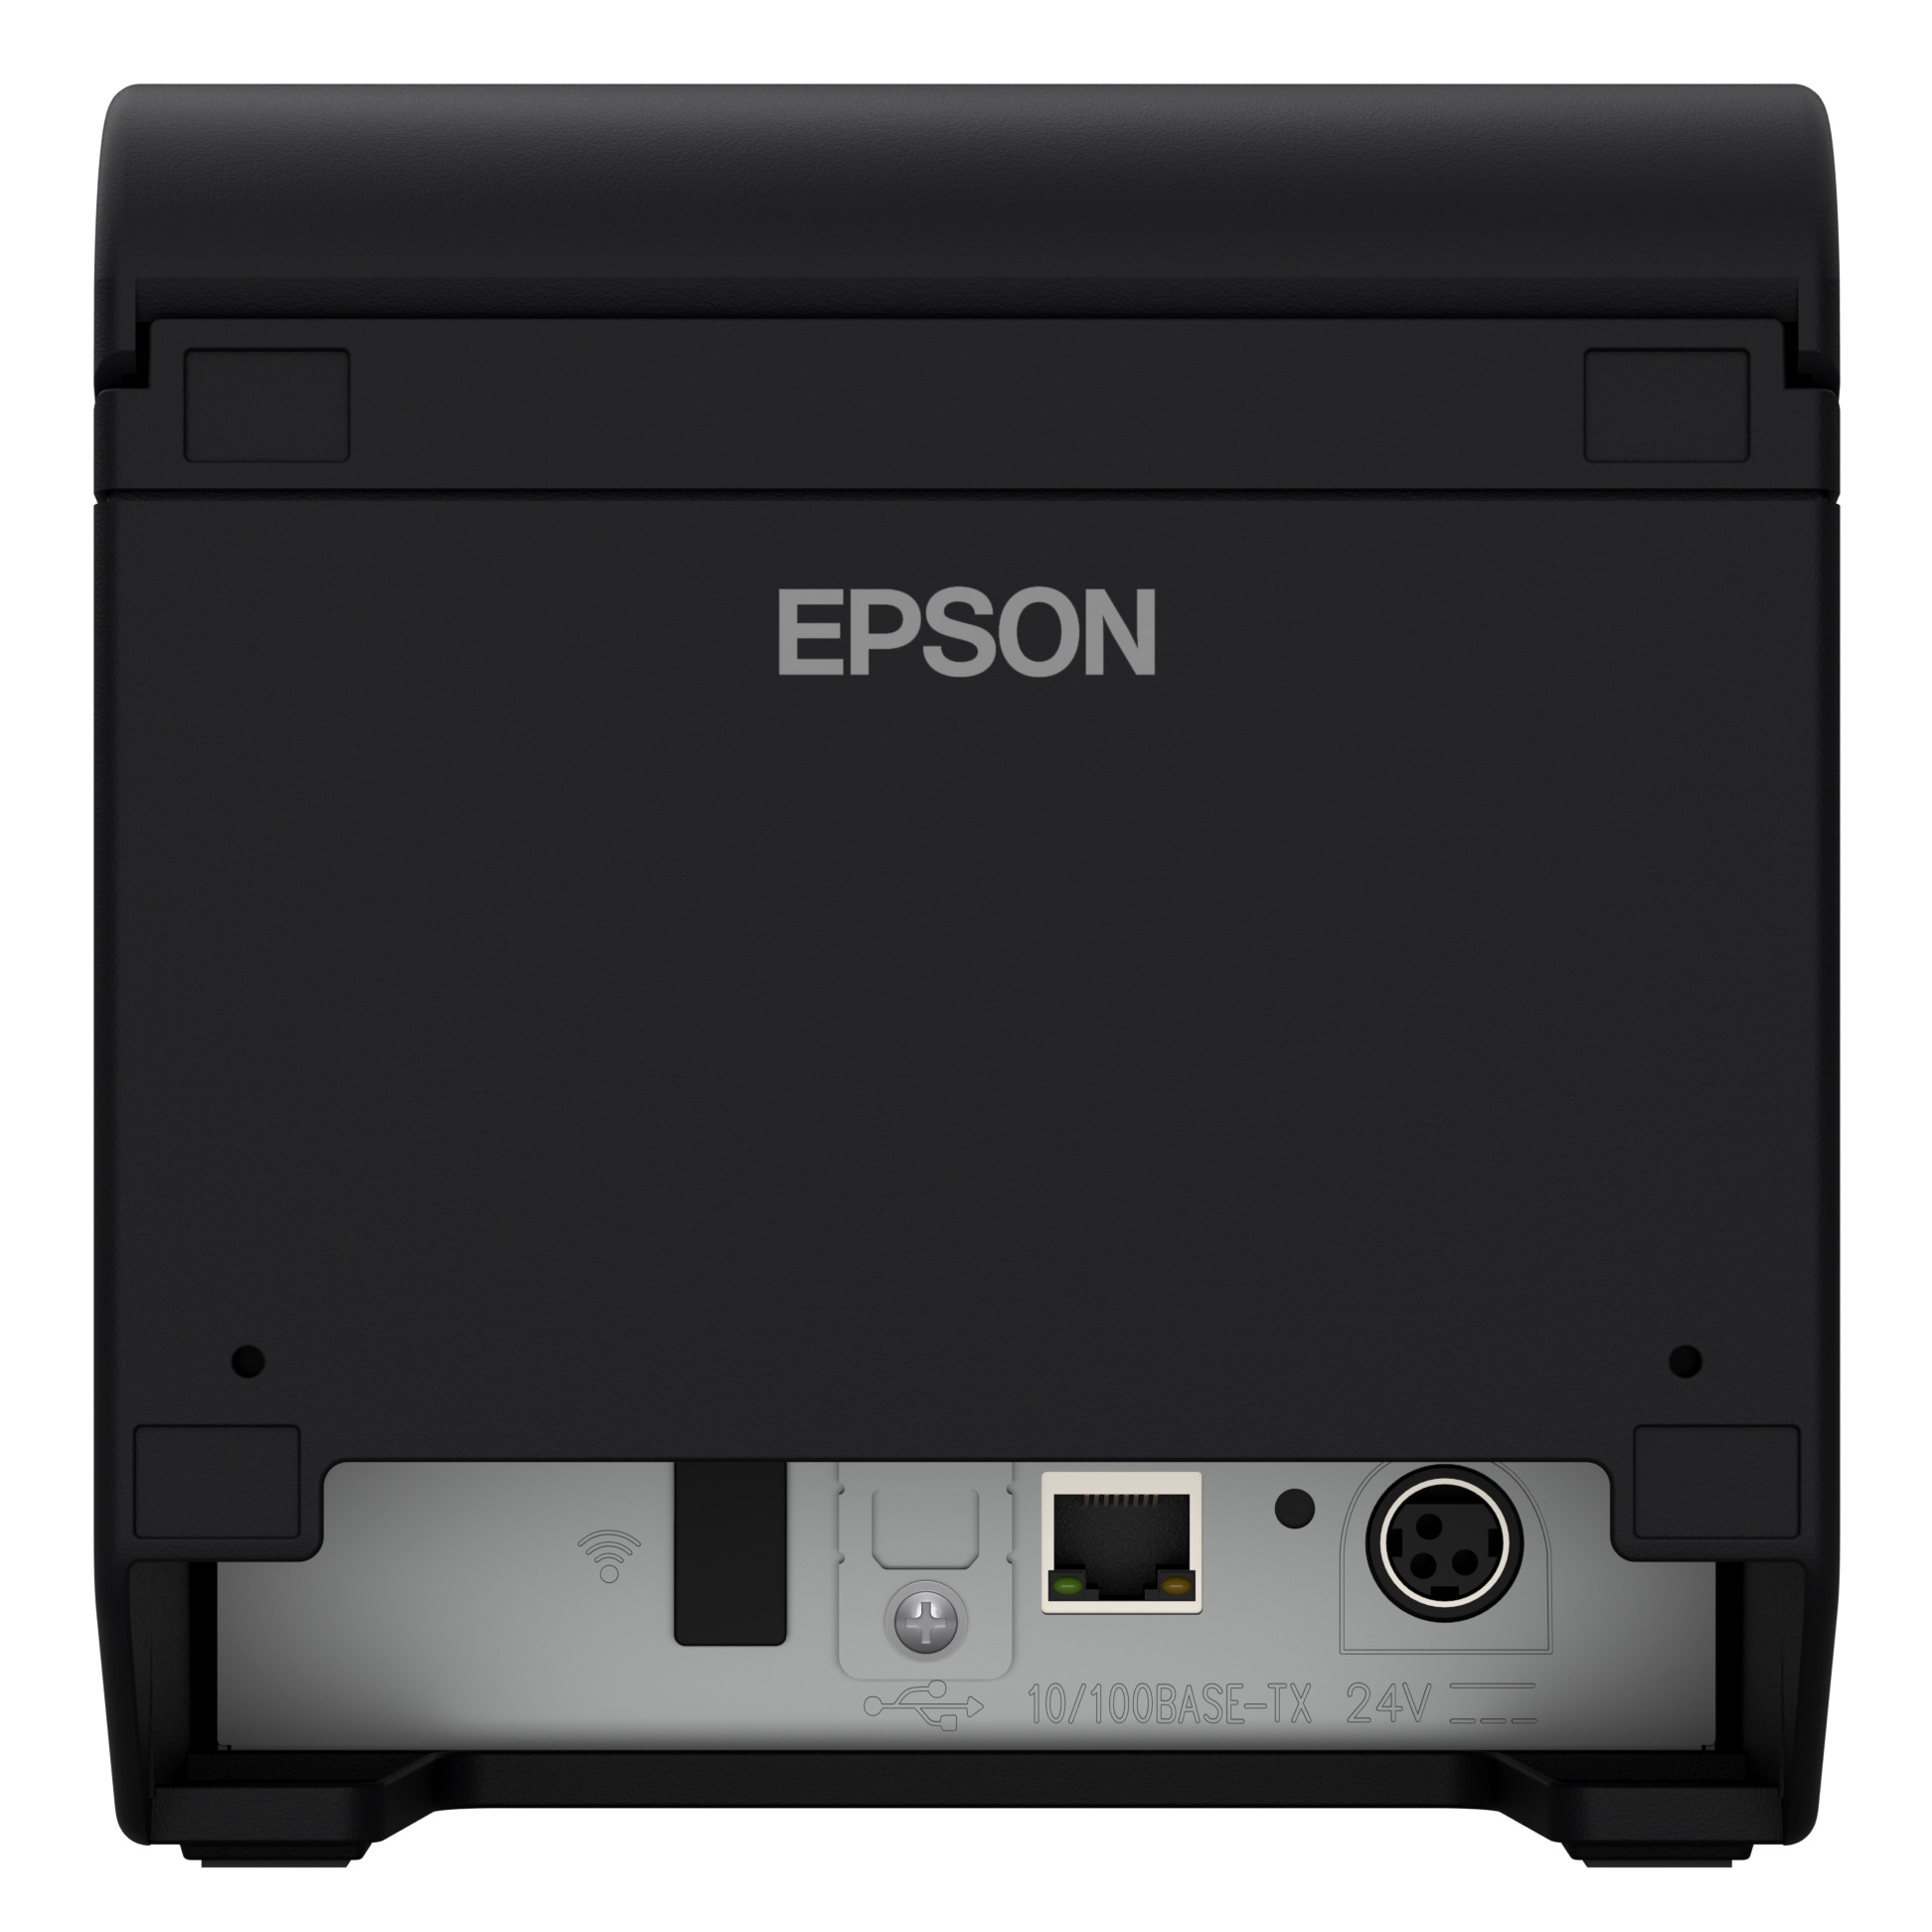 Epson Tm T82iii Ethernet Thermal Receipt Printer C31ch51562 Cash 8054